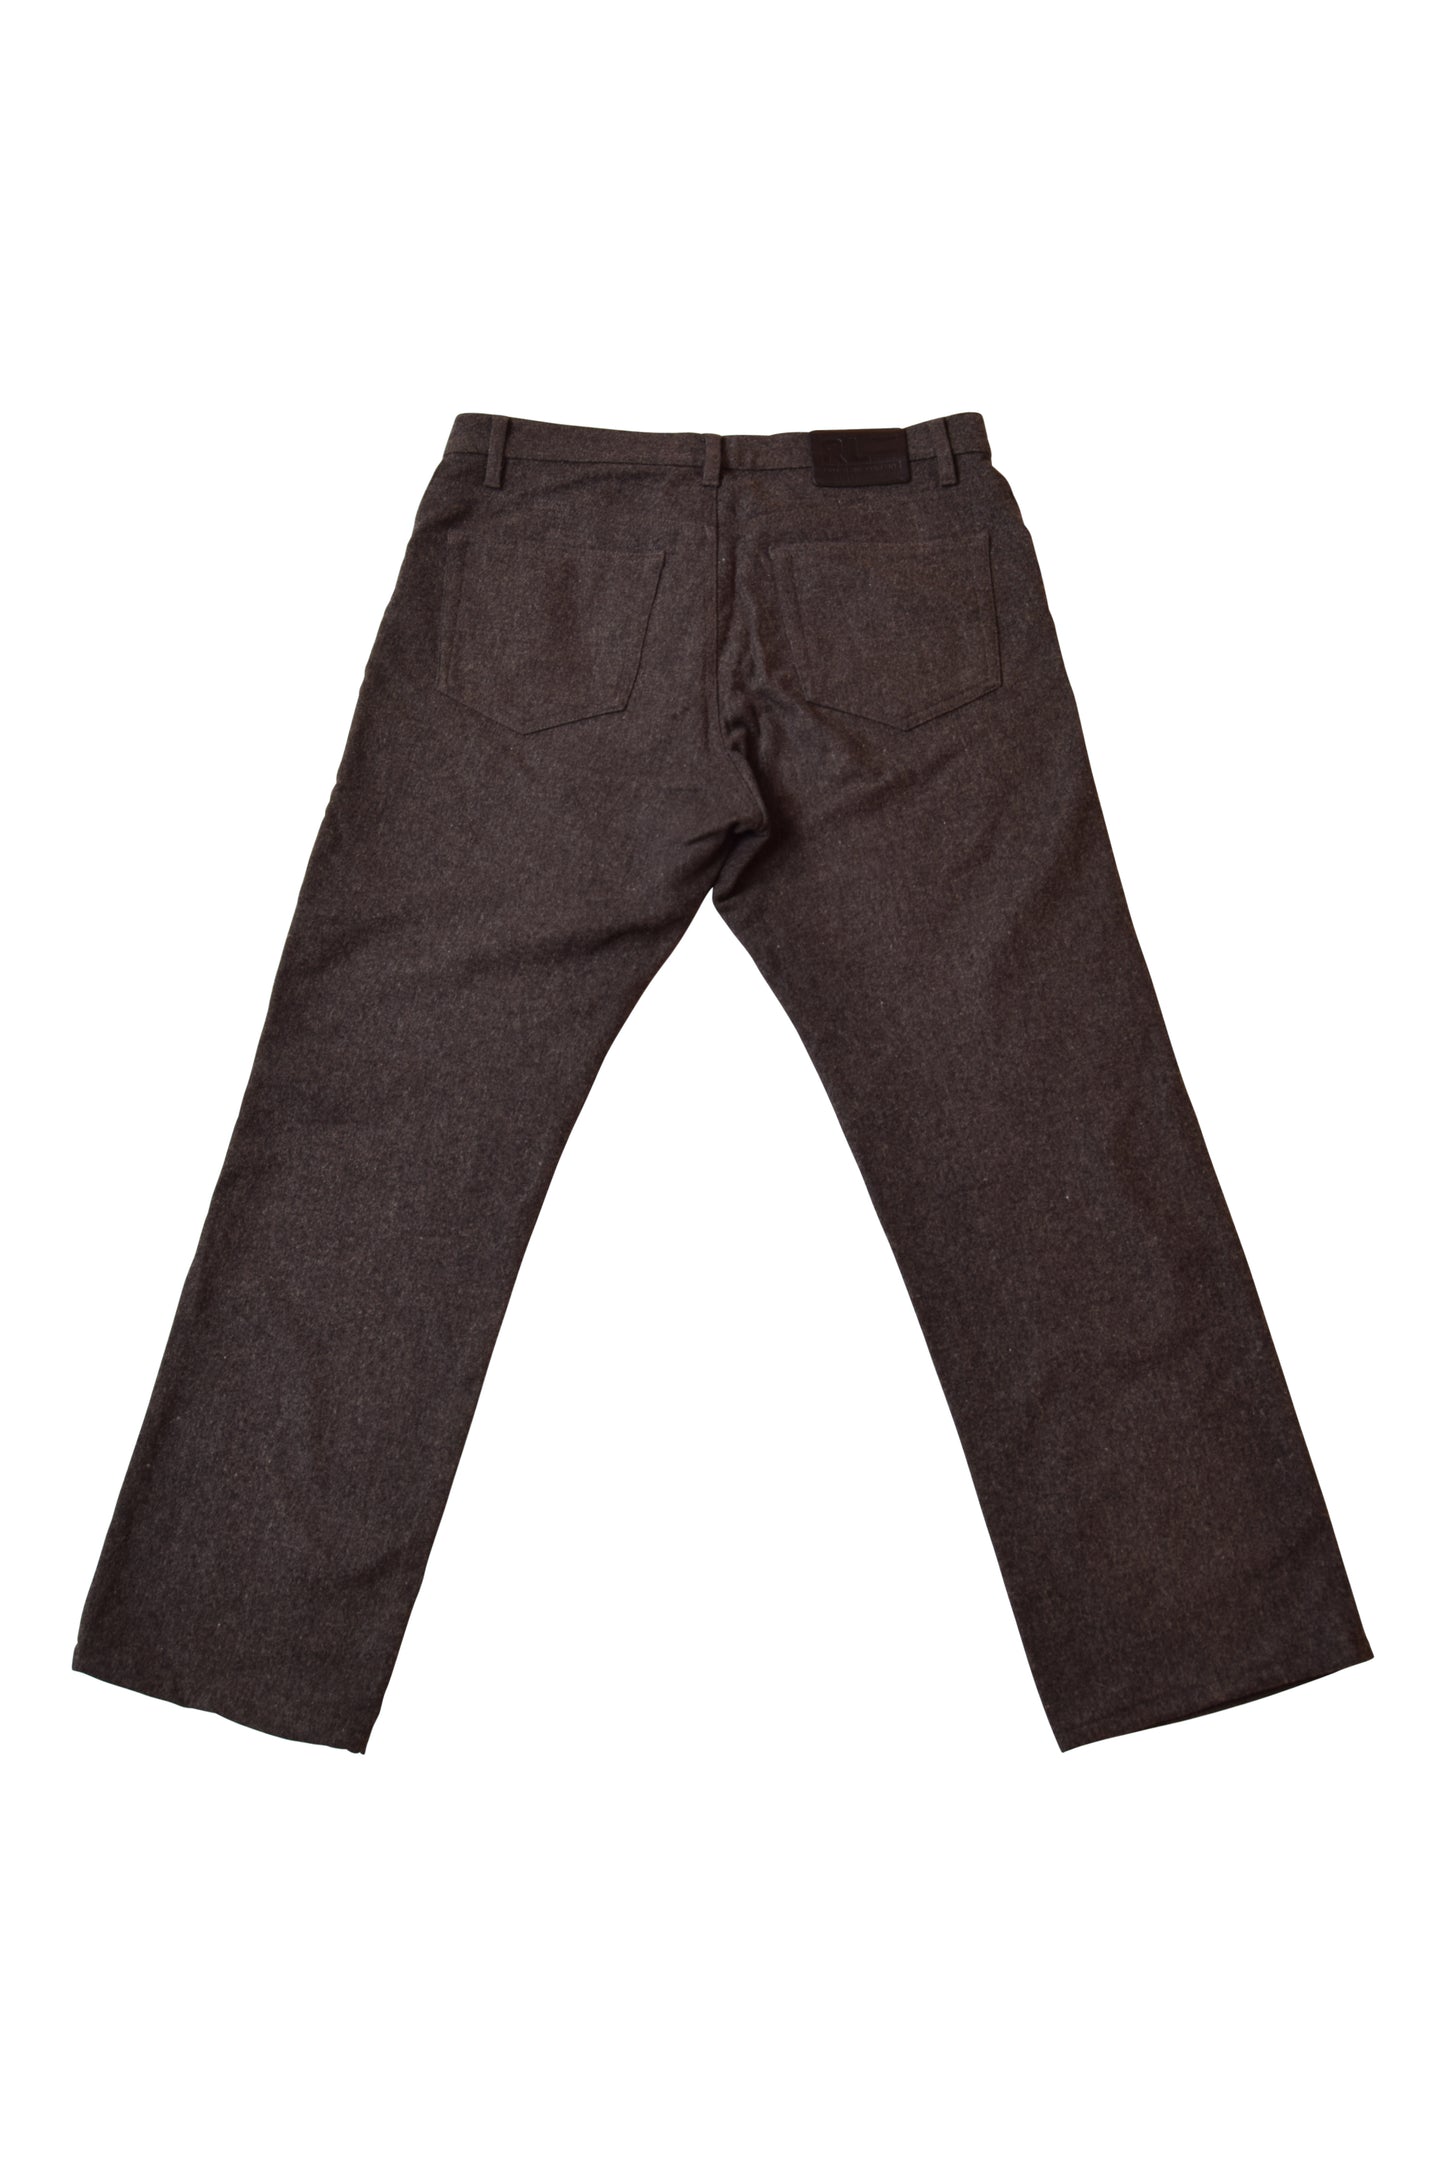 Vintage Ralph Lauren Polo Jeans Co. Trousers 100% Wool Size 34"/32"